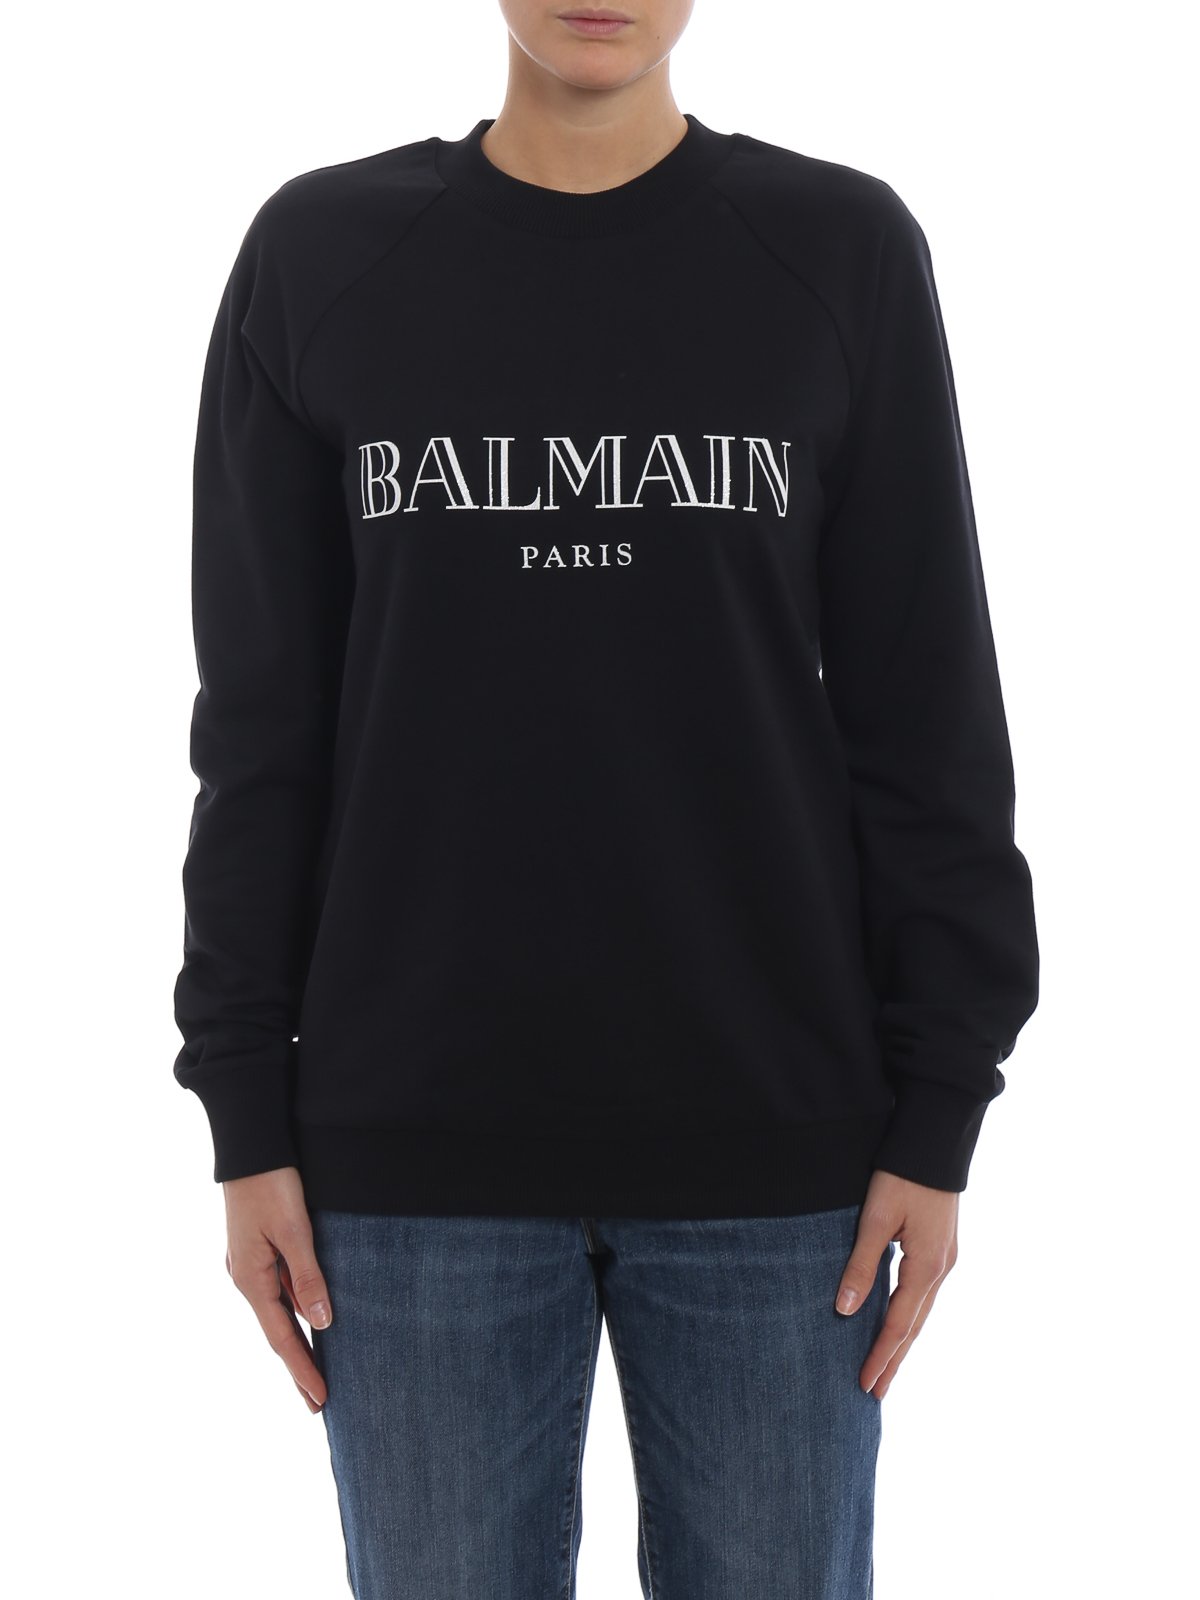 Våd Kollega fusion Sweatshirts & Sweaters Balmain - Balmain print black cotton sweatshirt -  146908I767C5101